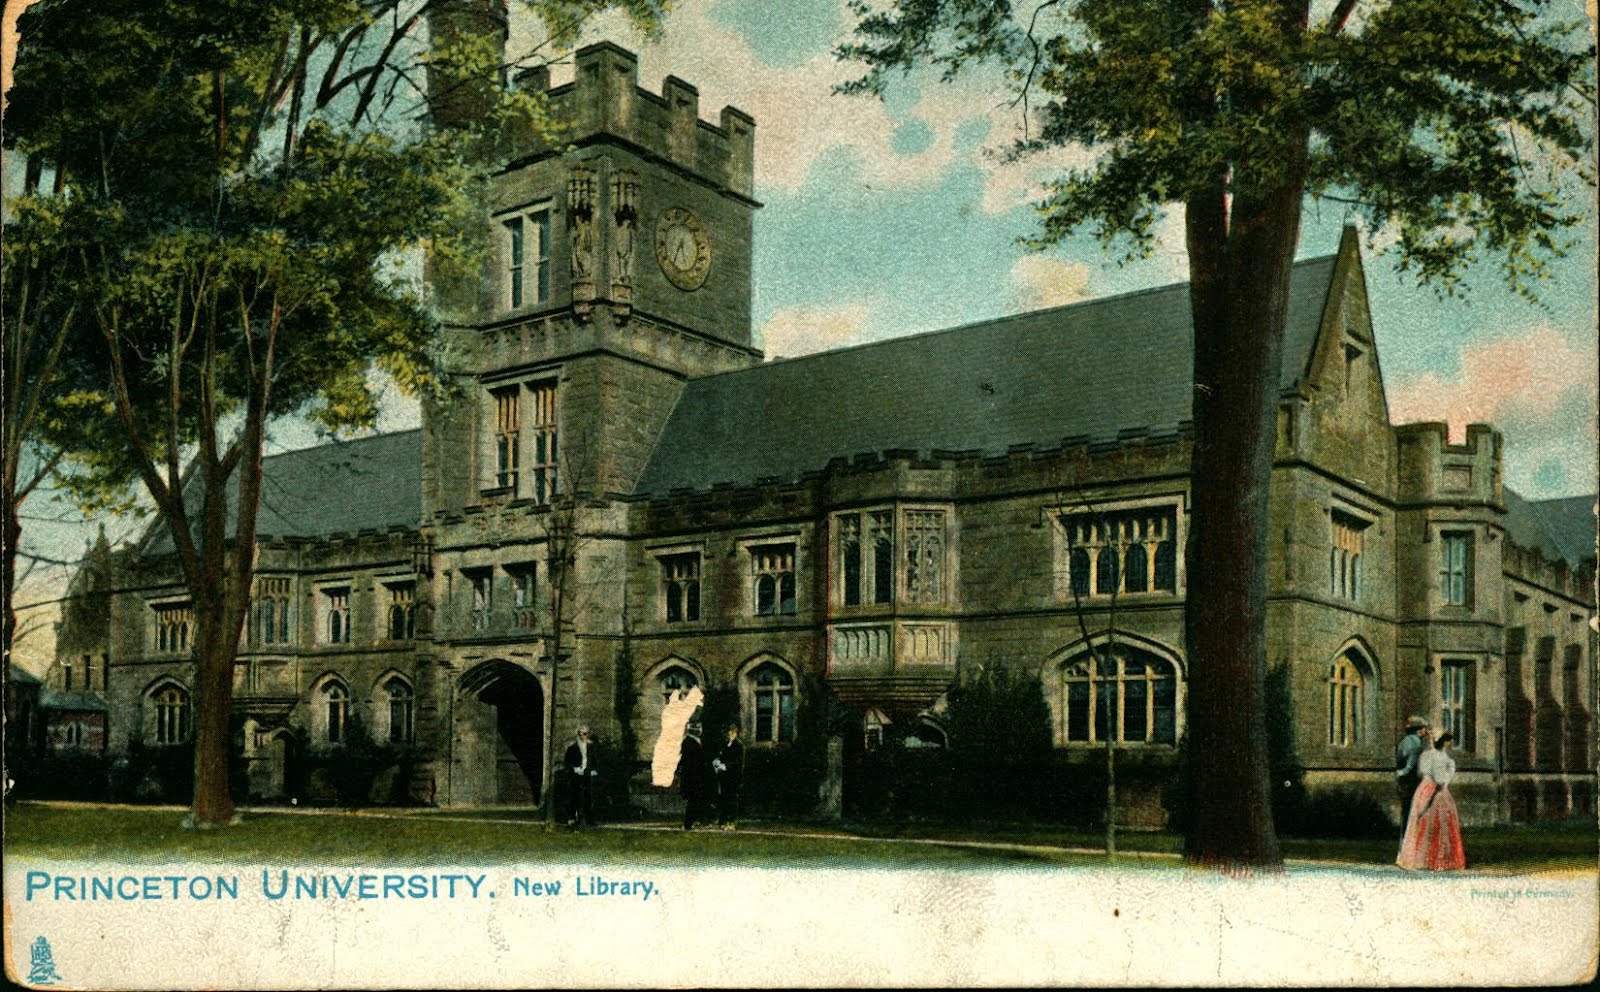 New Library, Princeton University, Princeton, New Jersey.